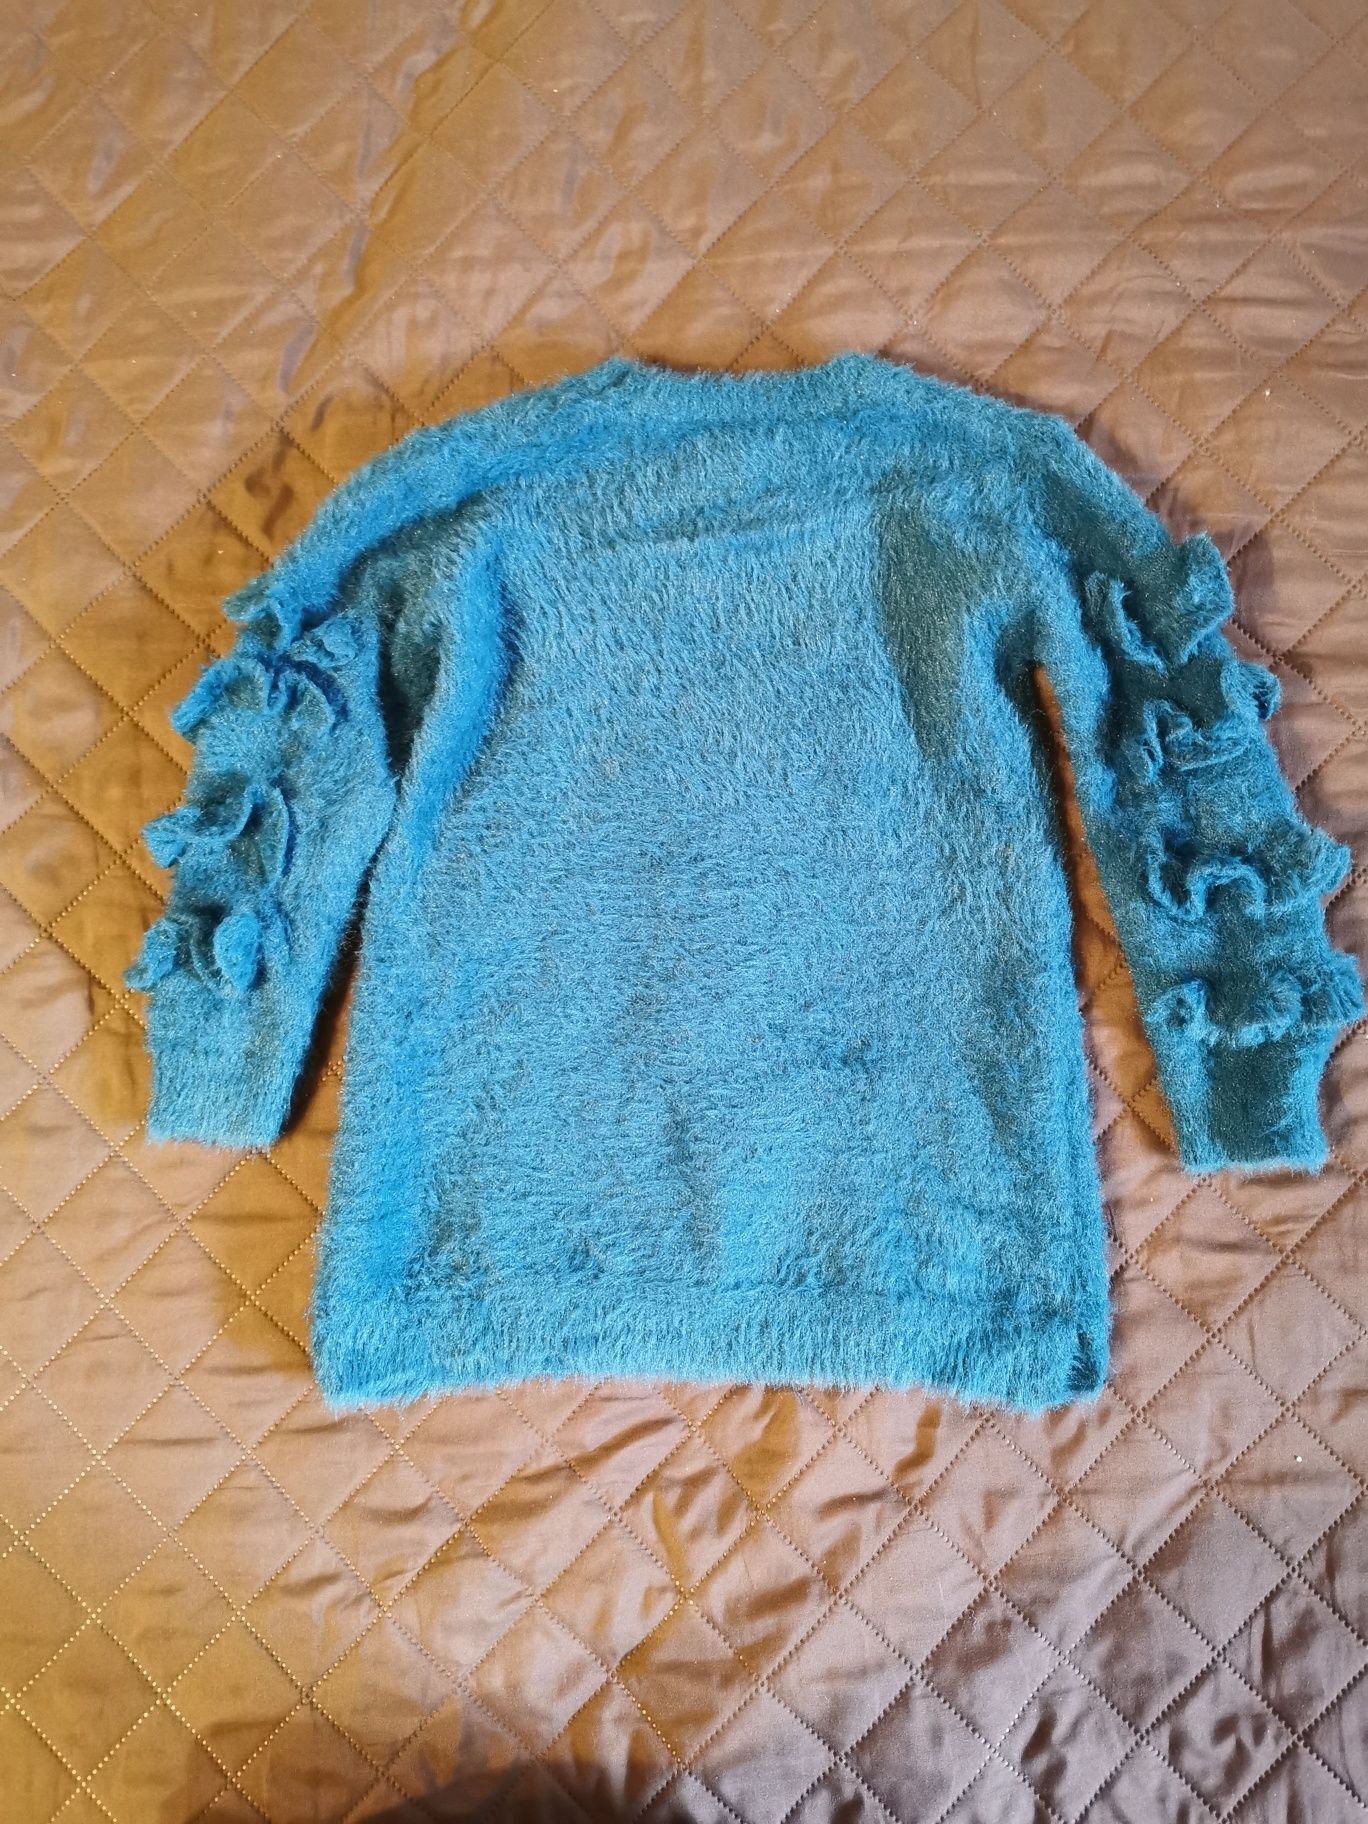 Bluza Guess, 5 ani, mărimea 110